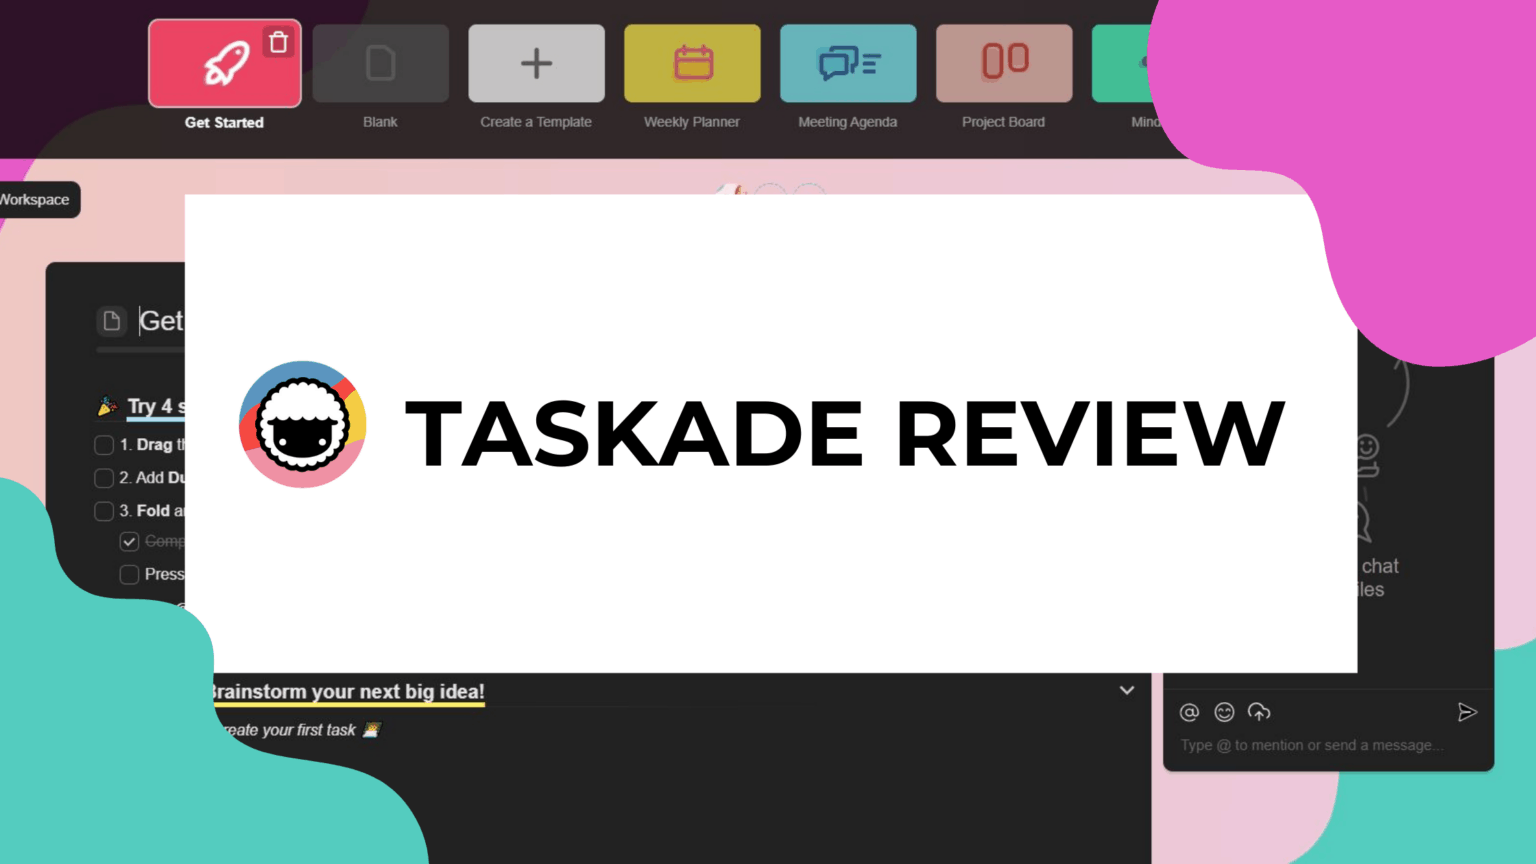 taskade sign up